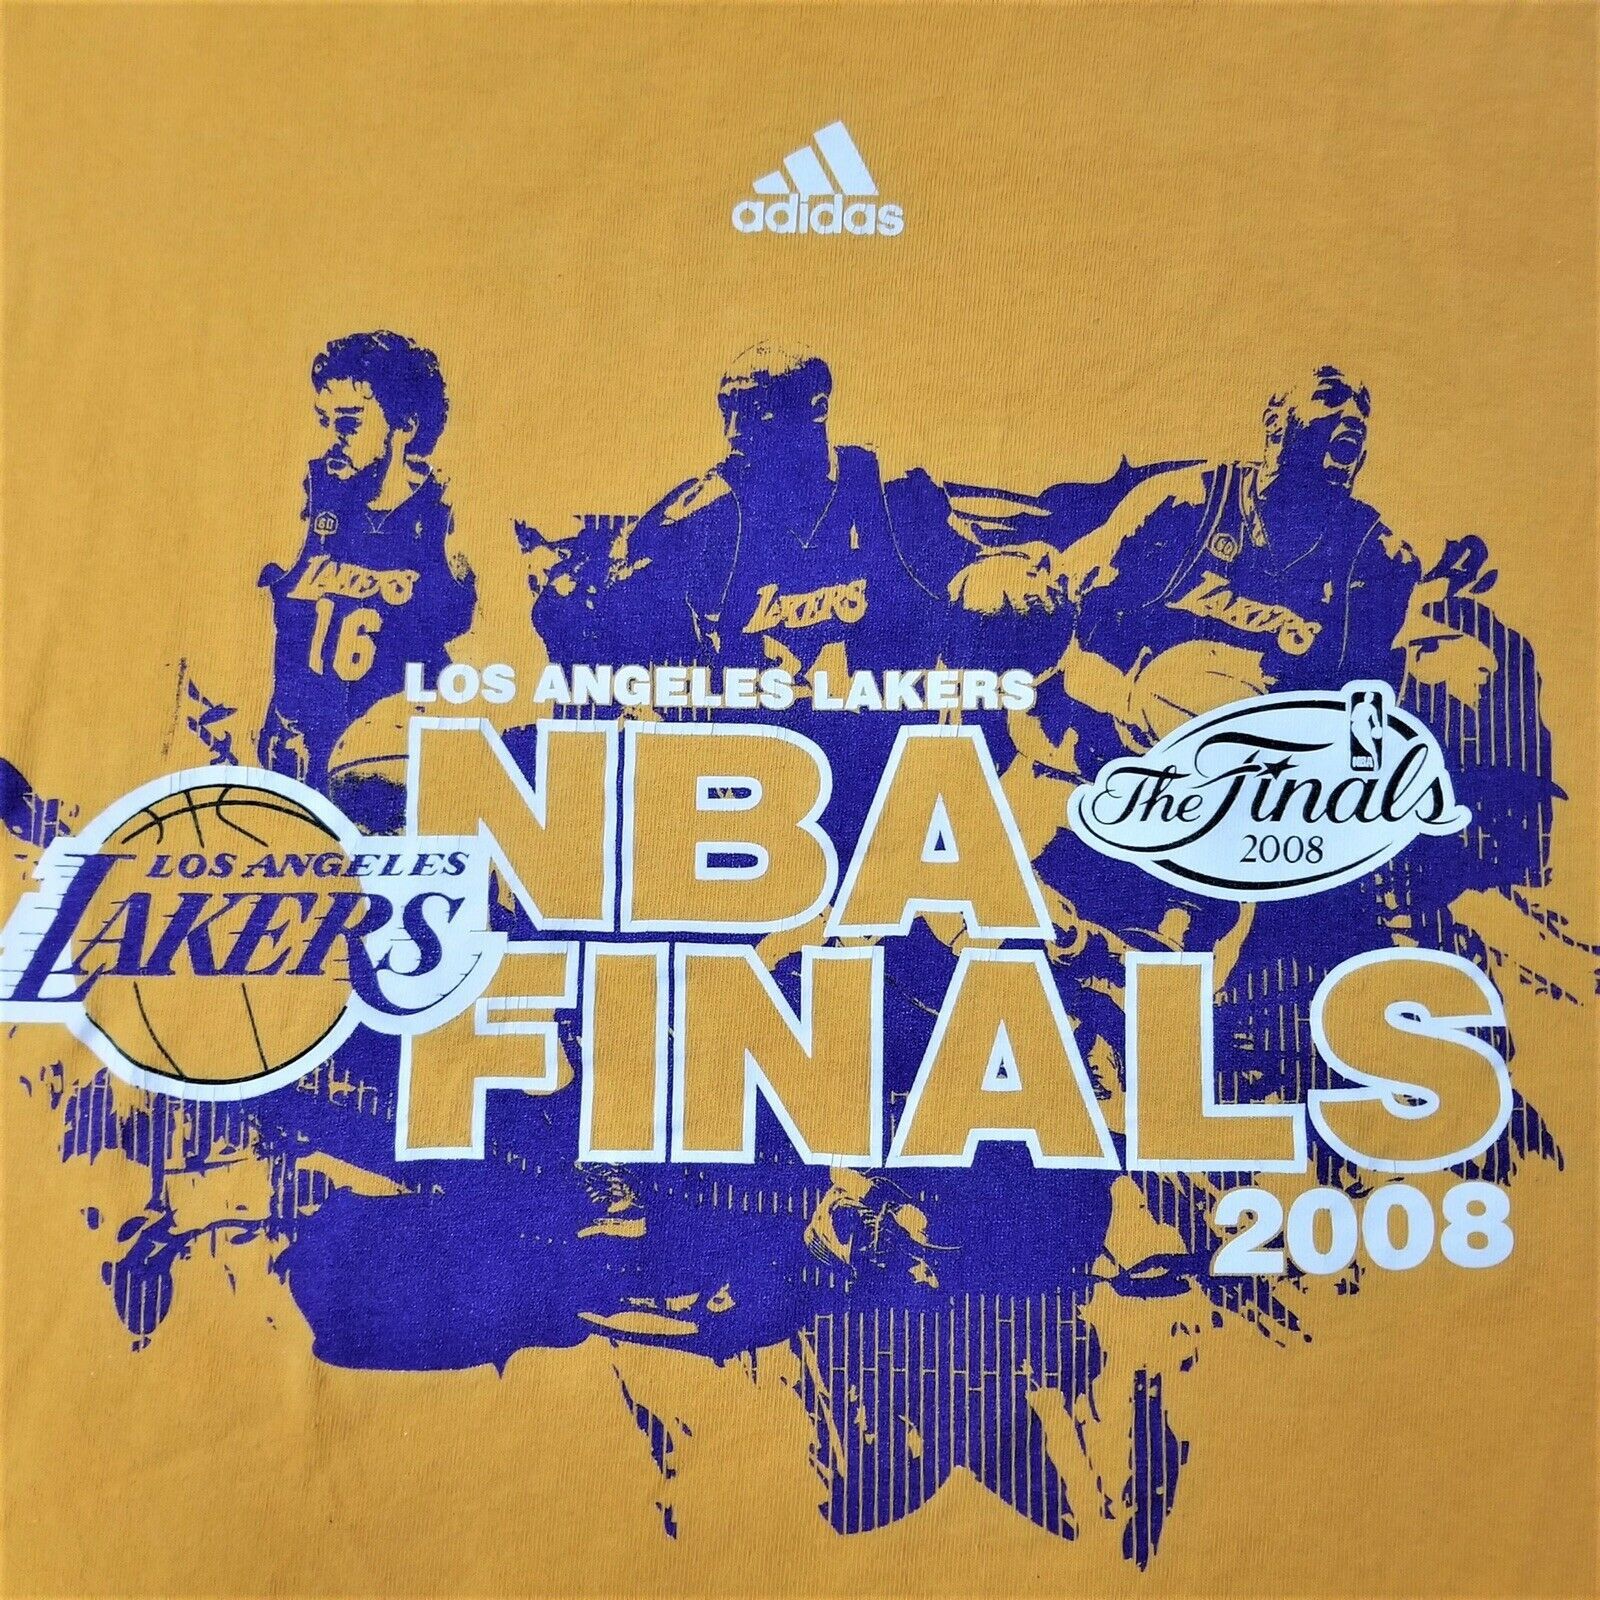 Adidas ADIDAS T-Shirt XL KOBE BRYANT #24 NBA Finals Size US XL / EU 56 / 4 - 8 Thumbnail